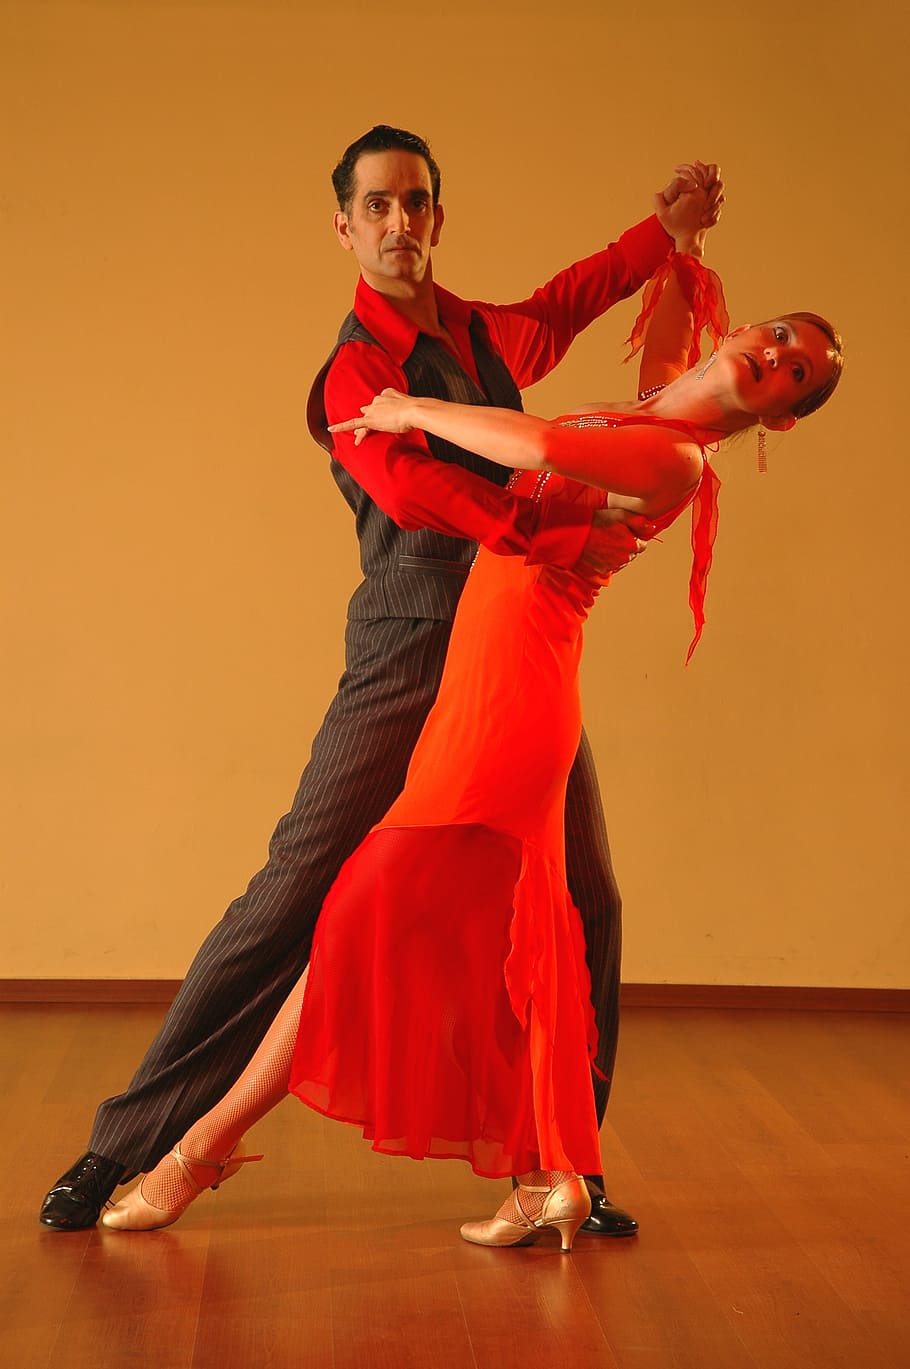 man, woman dancing, latin, dance, tango, ballroom, dancing couple, people dancing, passion, salsa dance